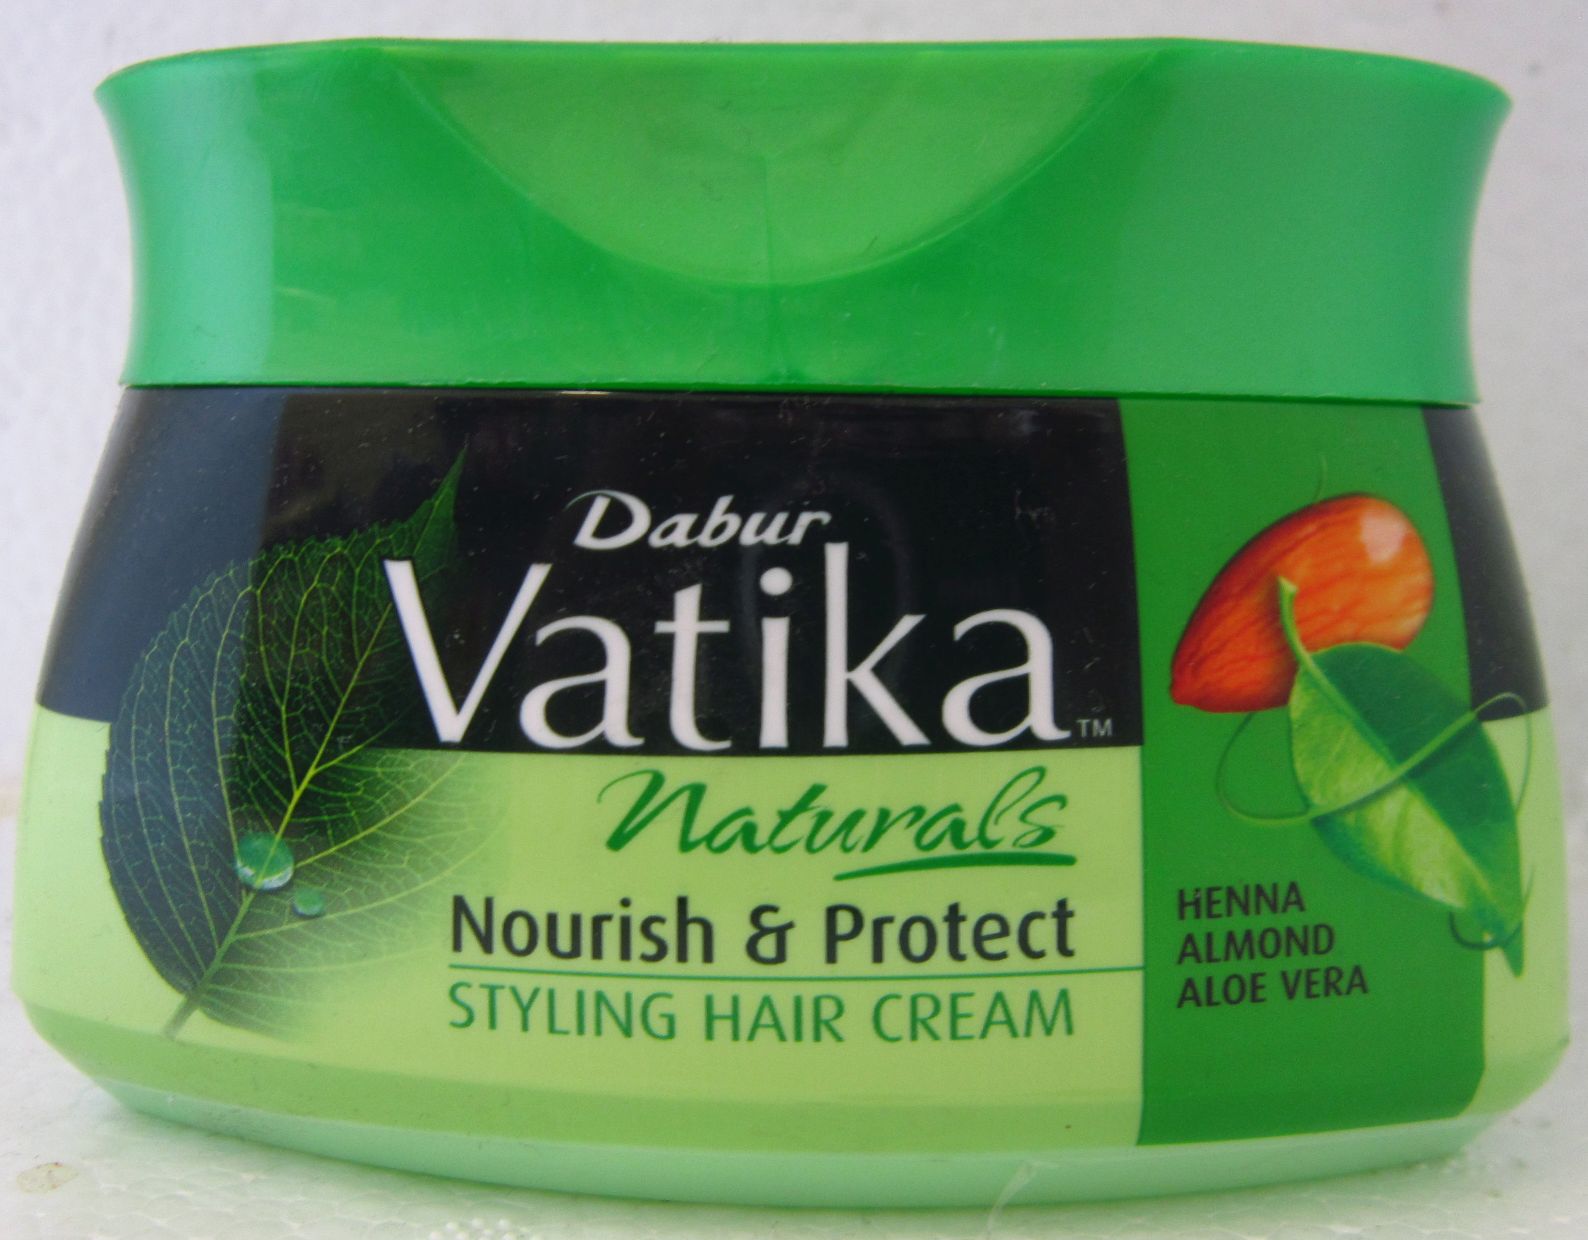 Dabur Vatika Nourish & Protect Styling Hair Cream Image